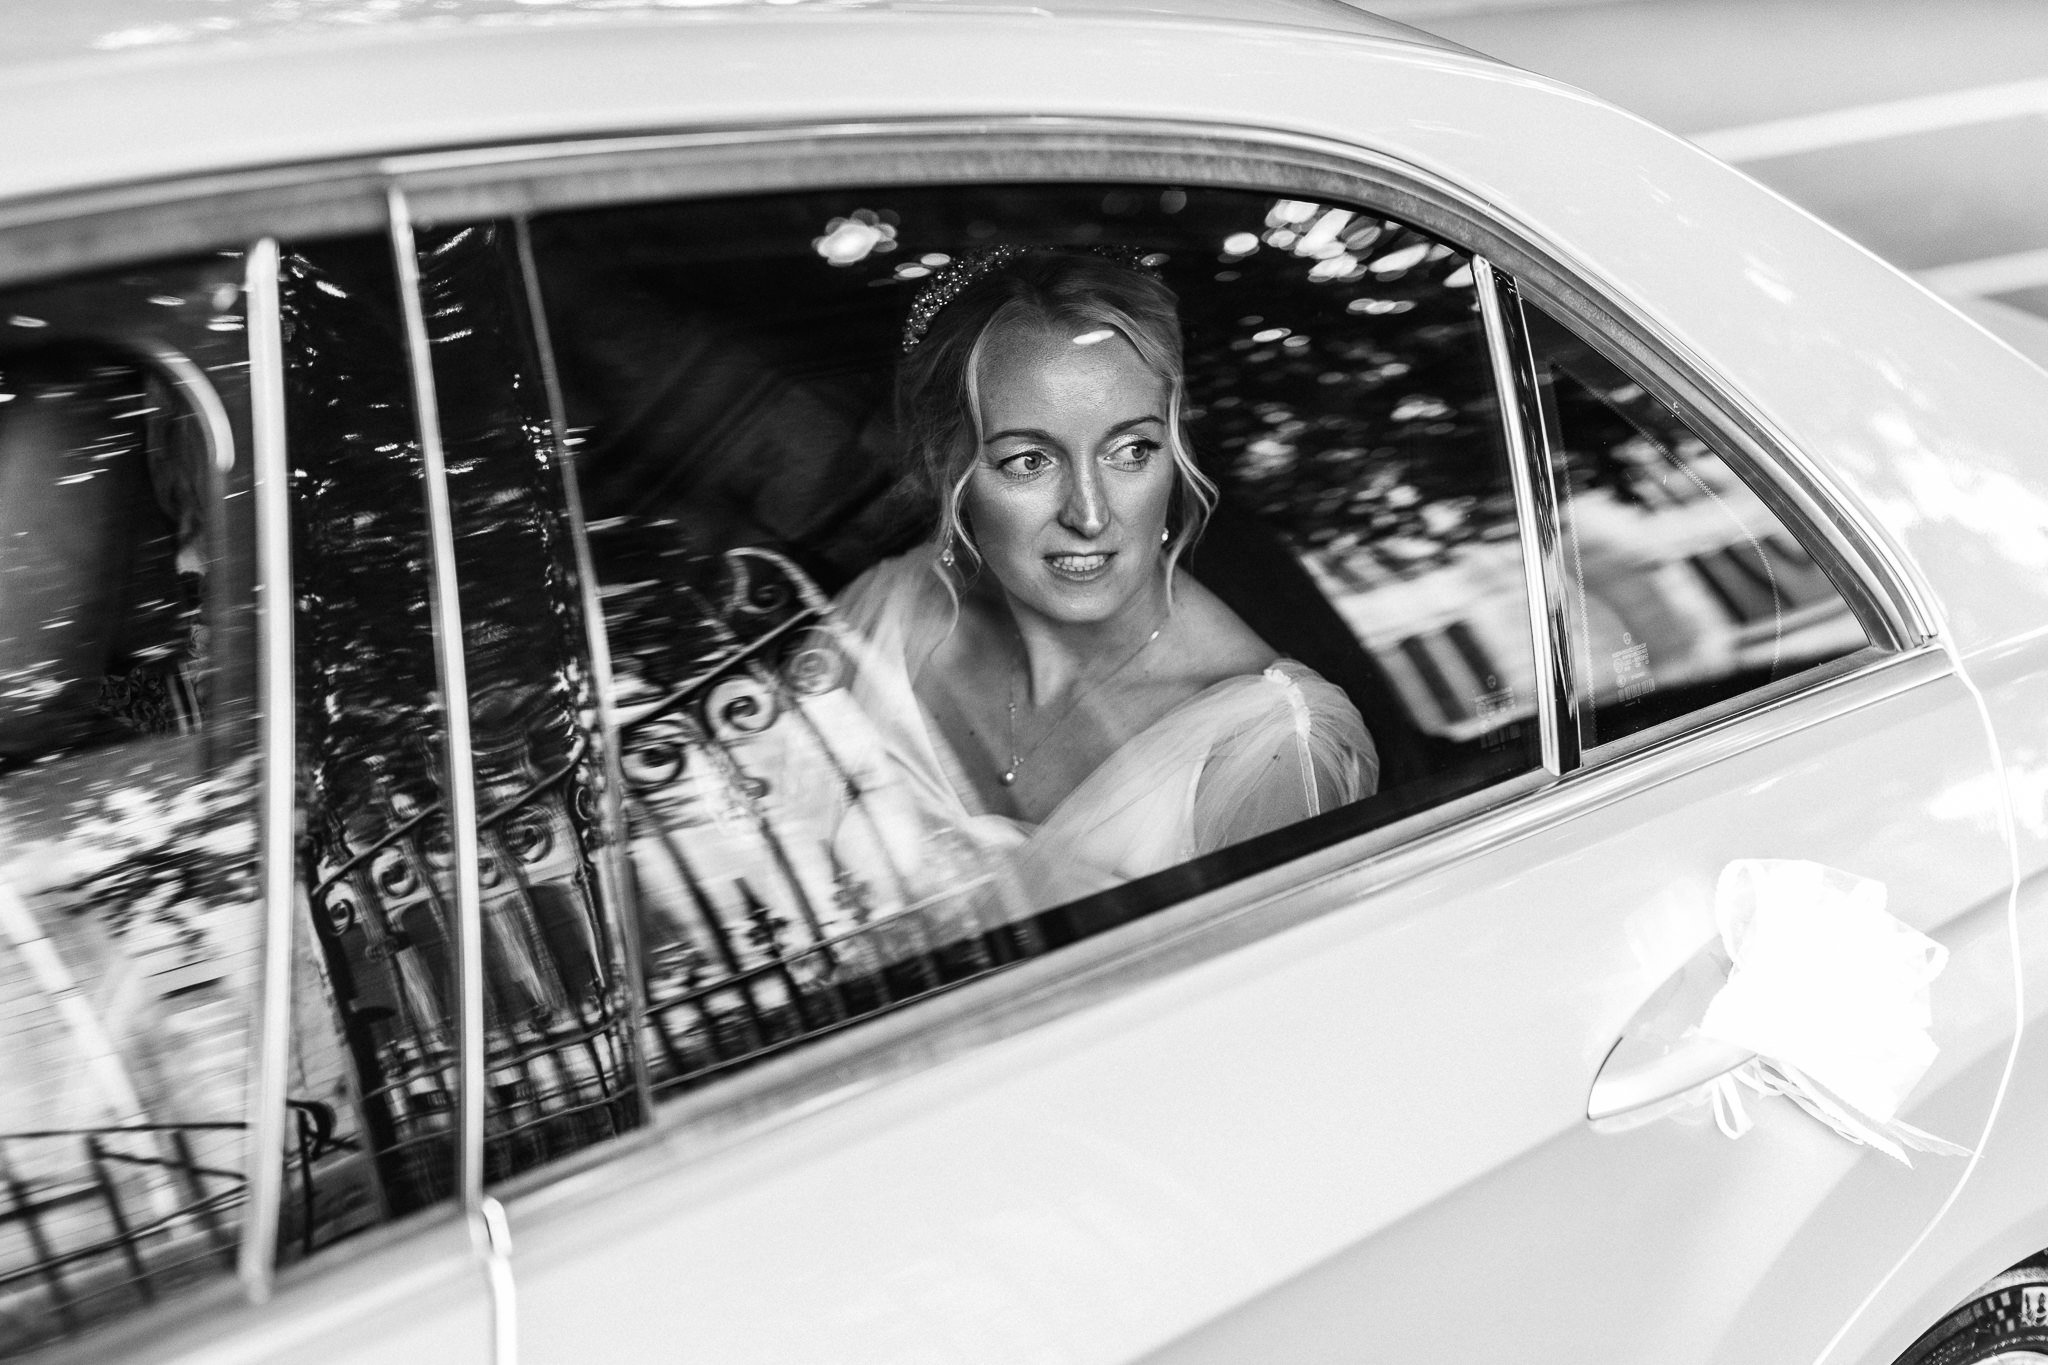  Bride arrives in her wedding car  